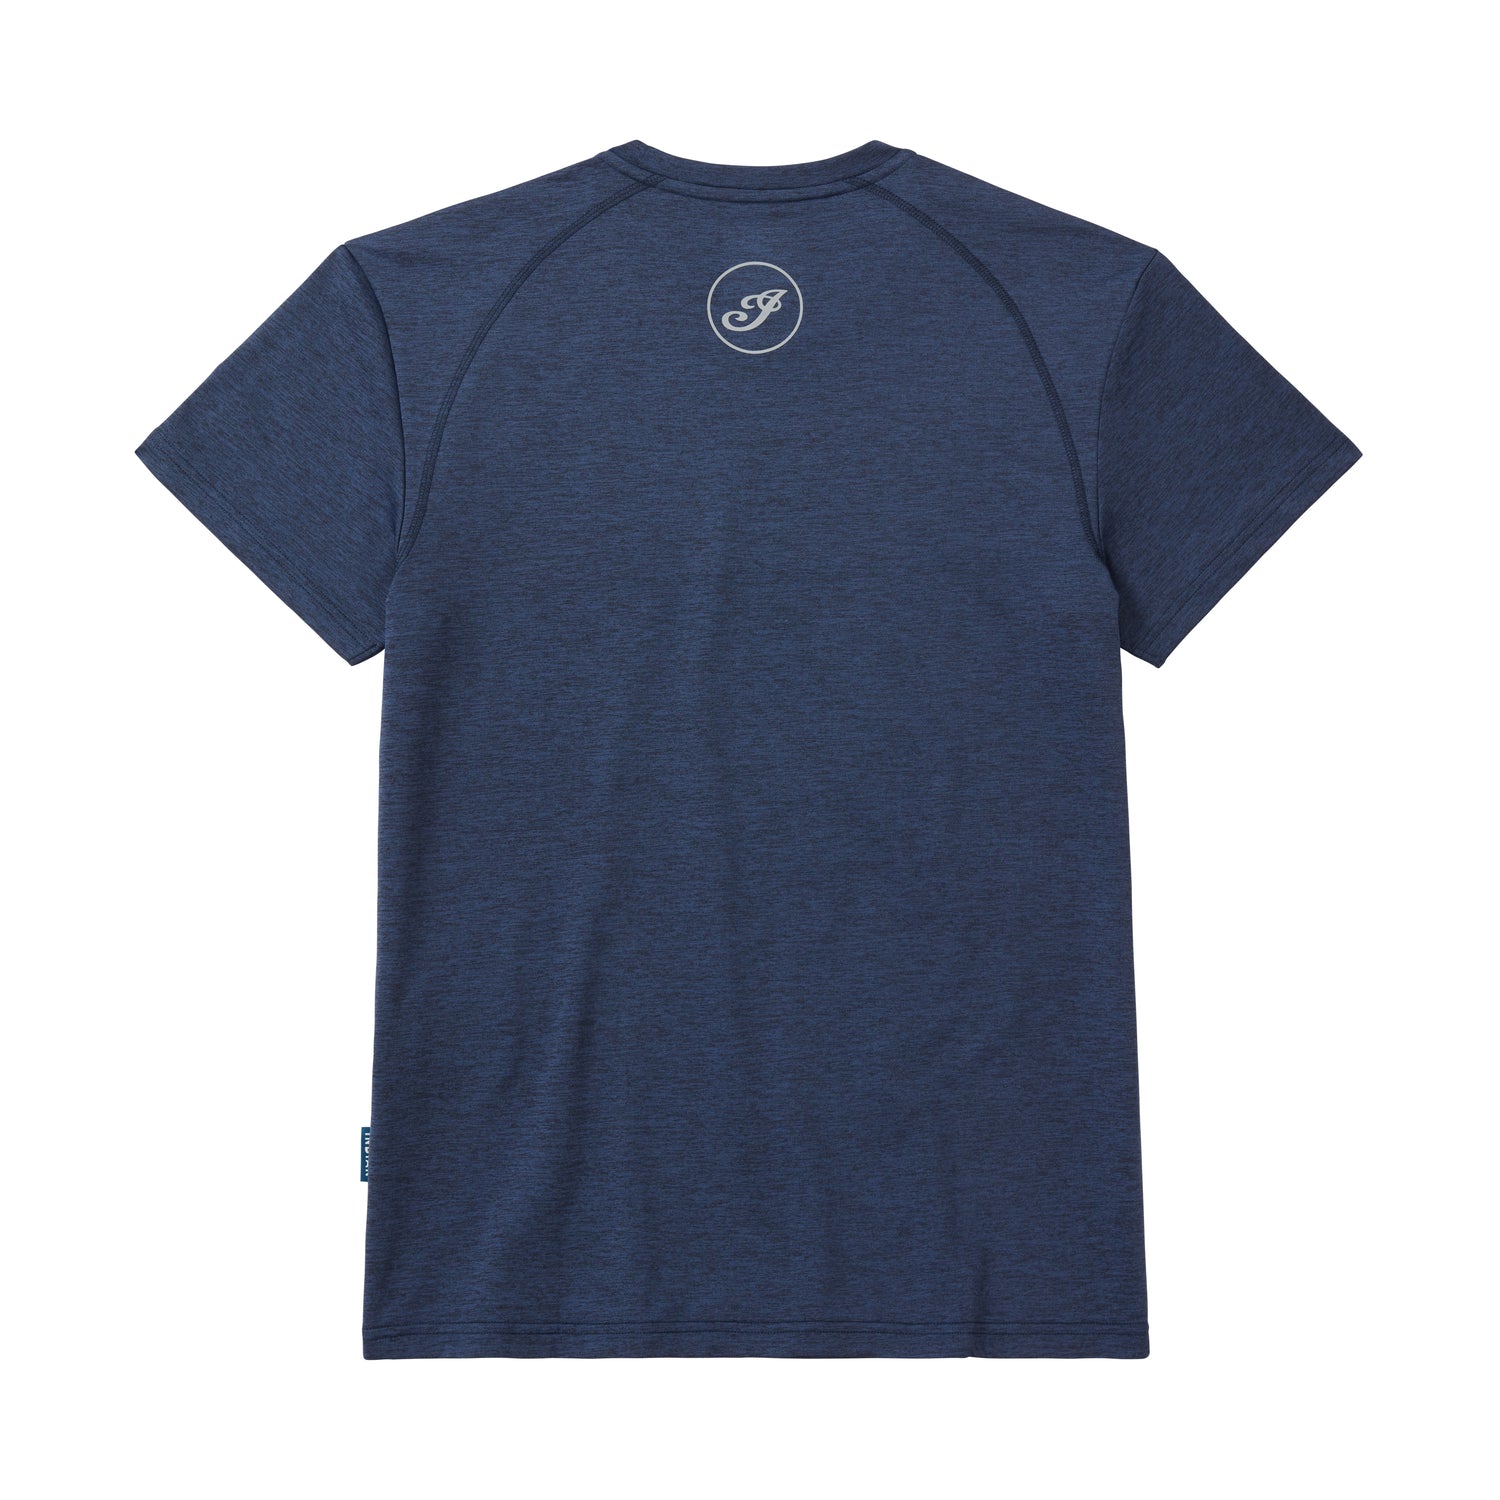 Men's Raglan Active T-Shirt, Blue